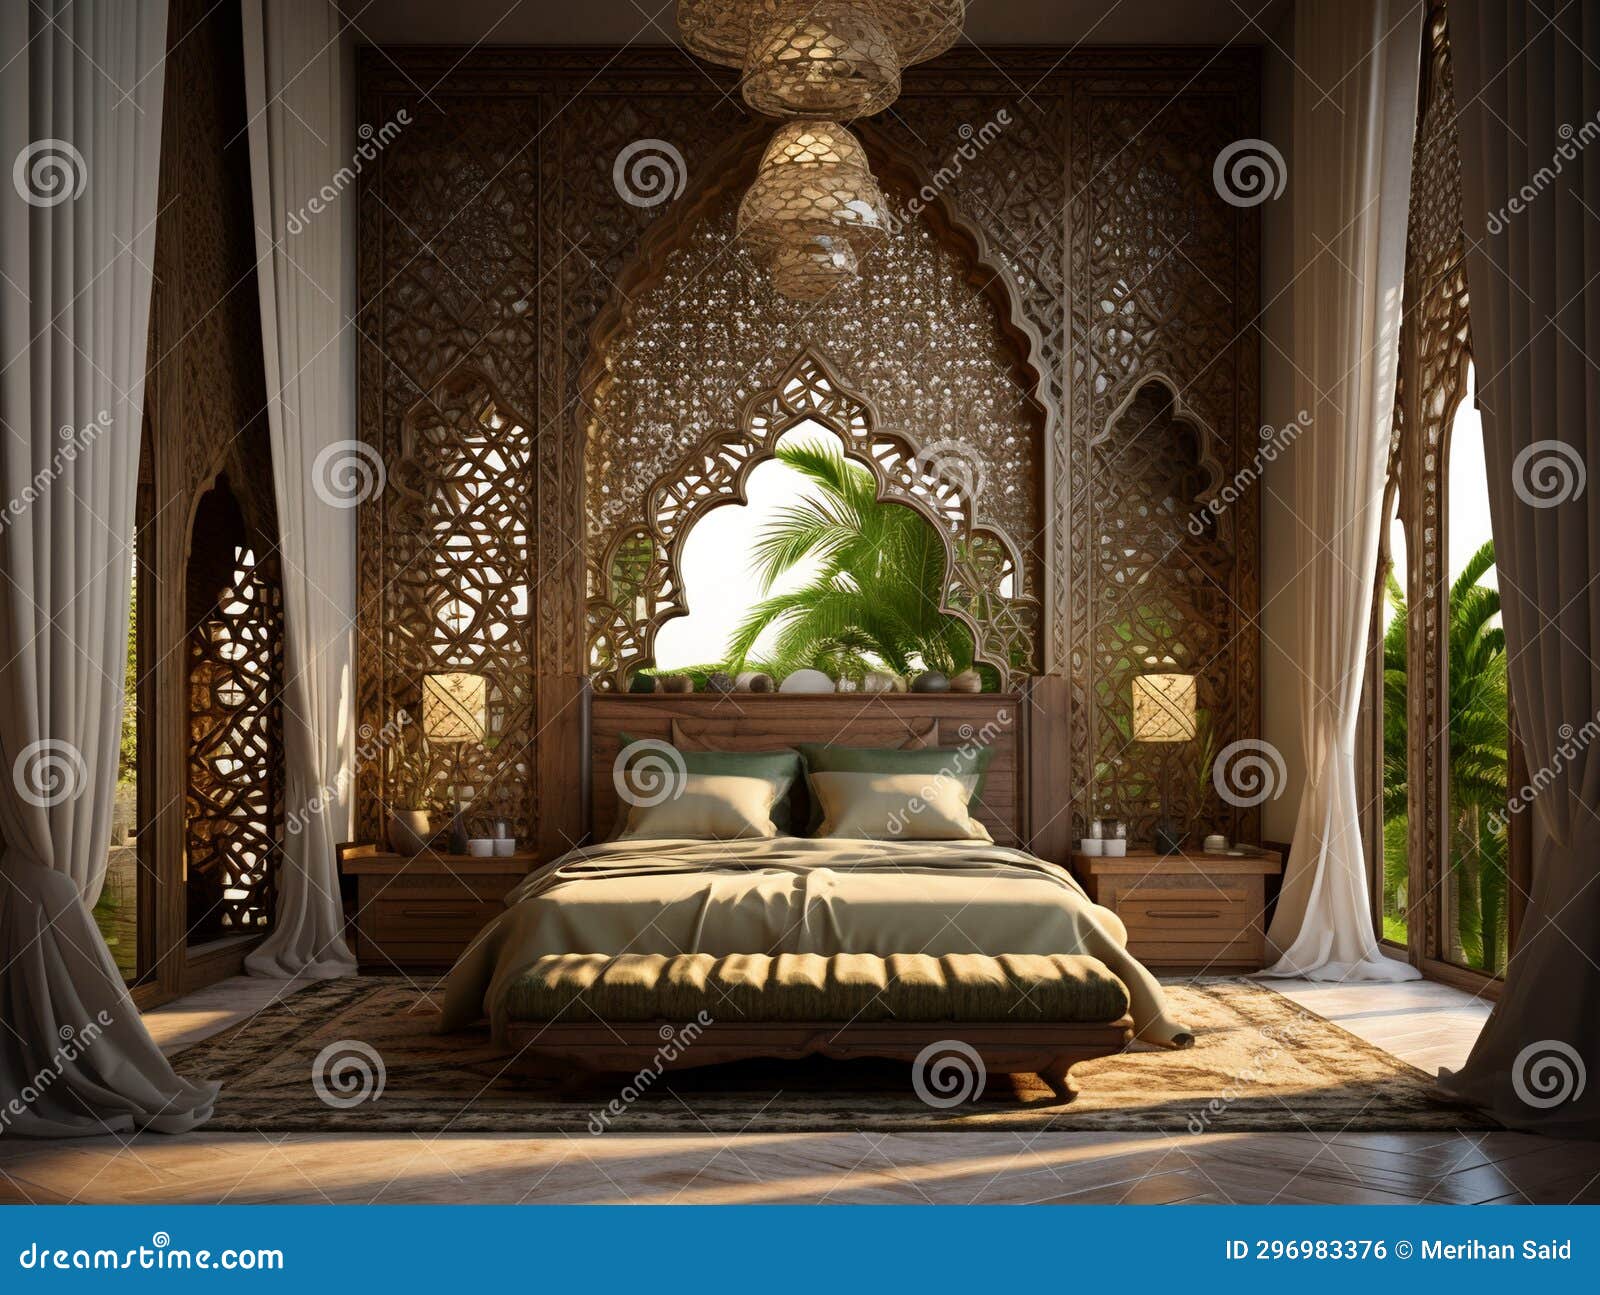 bedroom in arabic interior  style with mashrabiya behind the bed, ai generative